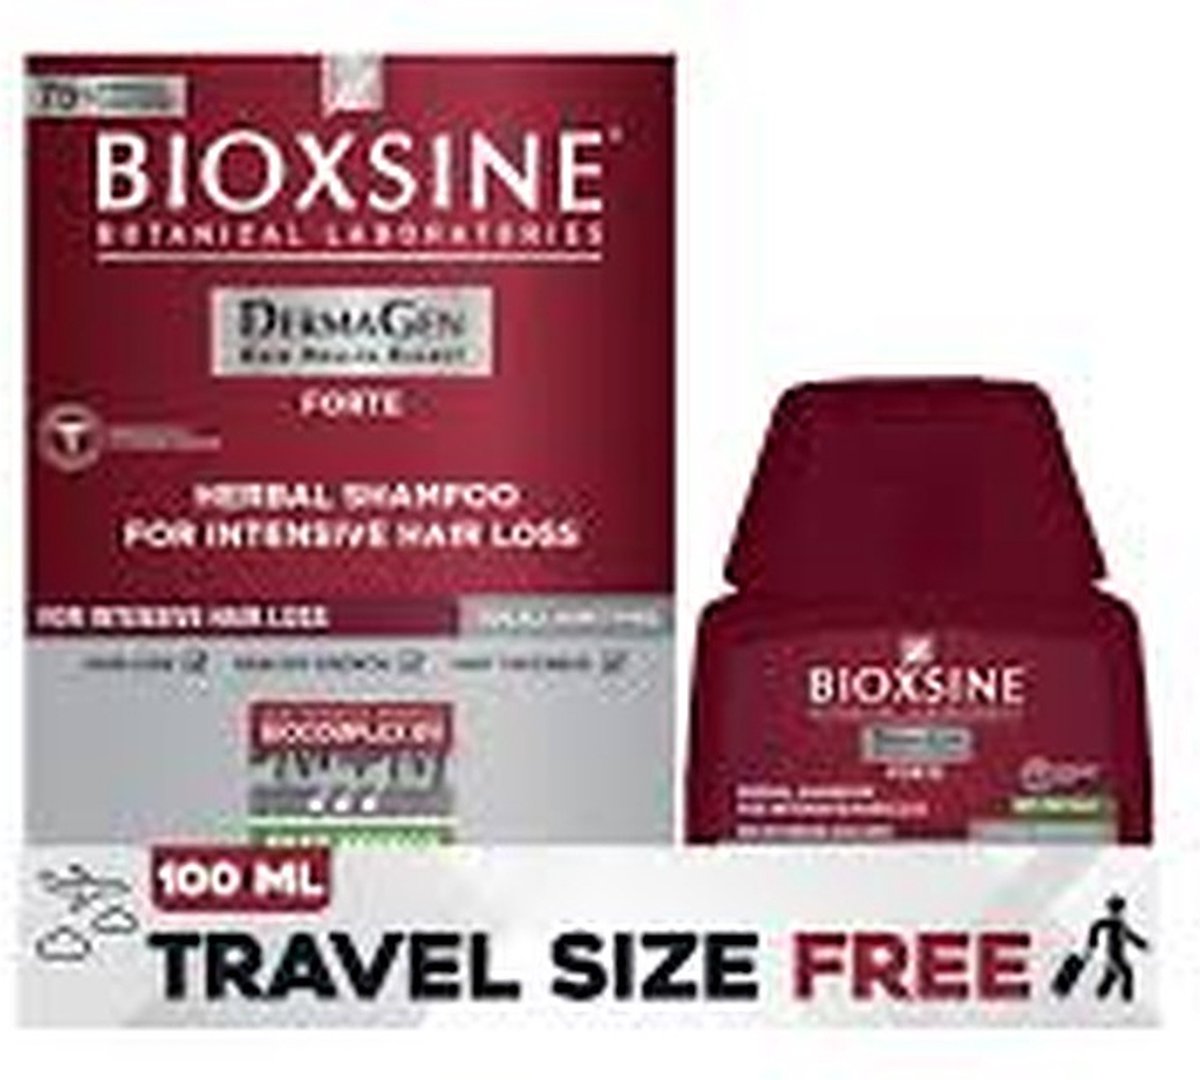 Bioxsine forte shampoo 300 ml plus 100 ml forte shampoo (400 ml) anti haaruitval